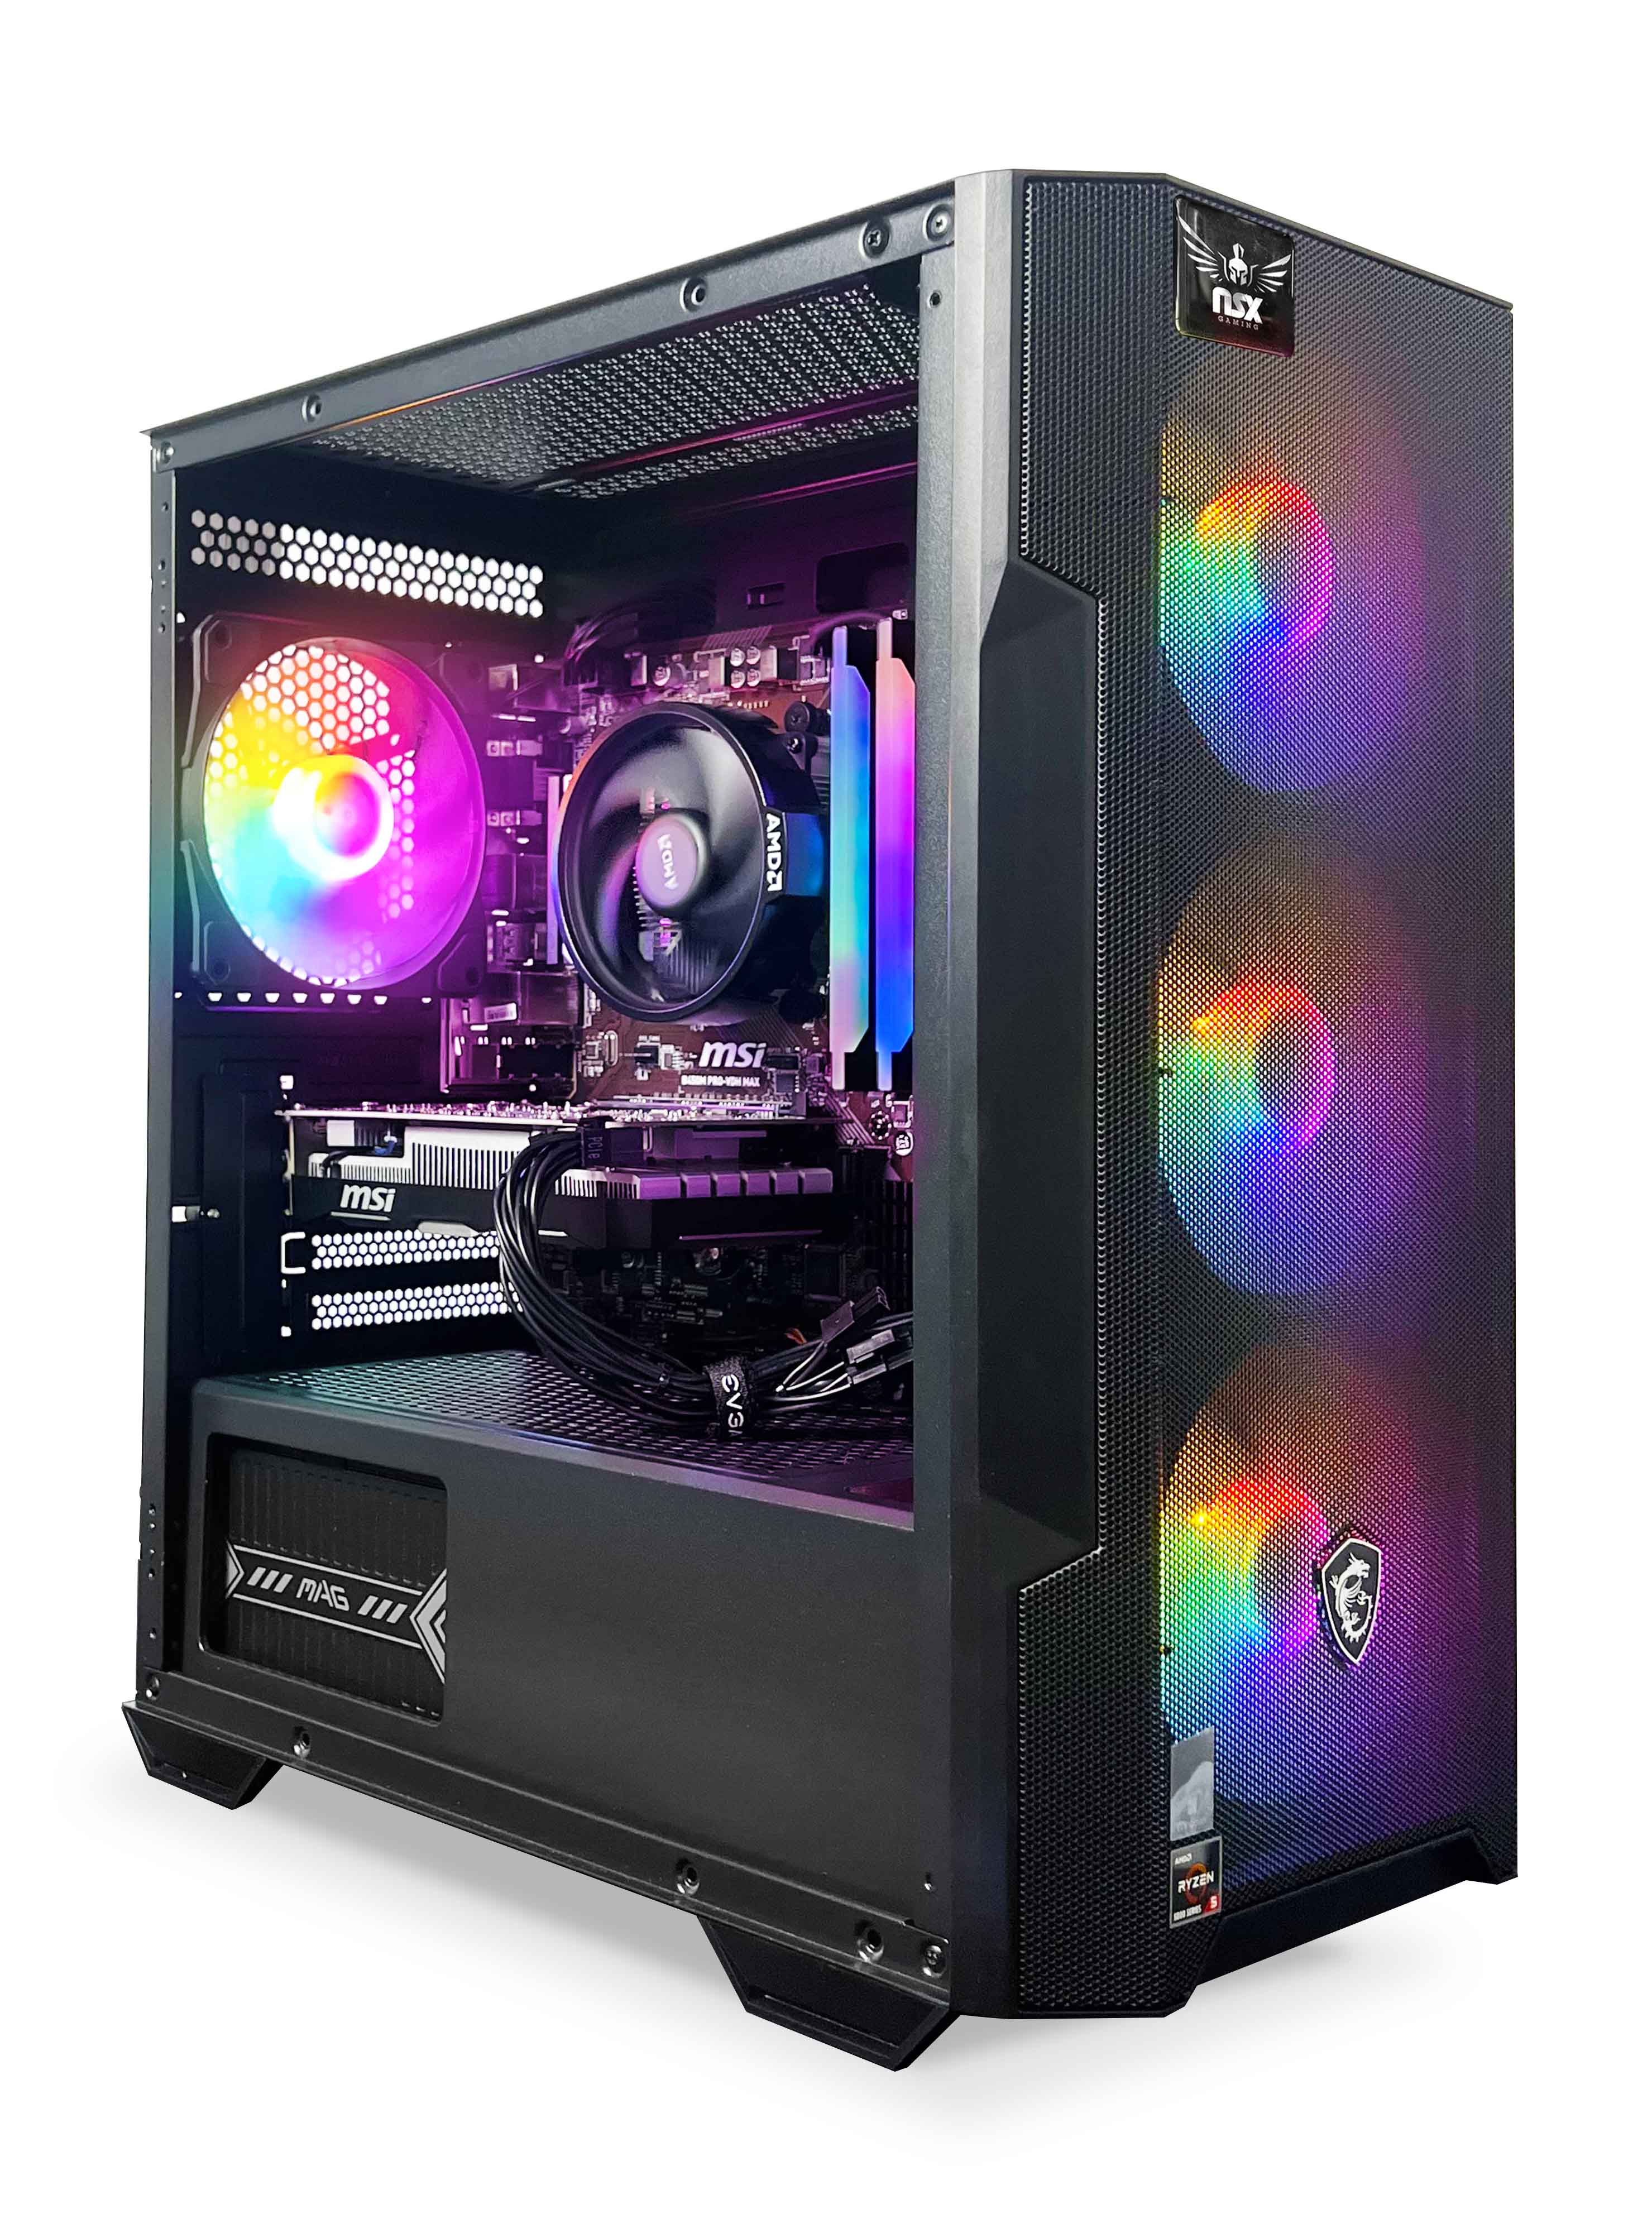 Nsx Gaming PC Desktop – Amd Ryzen 5 5500 3.6 GHz, GTX 1650 D6